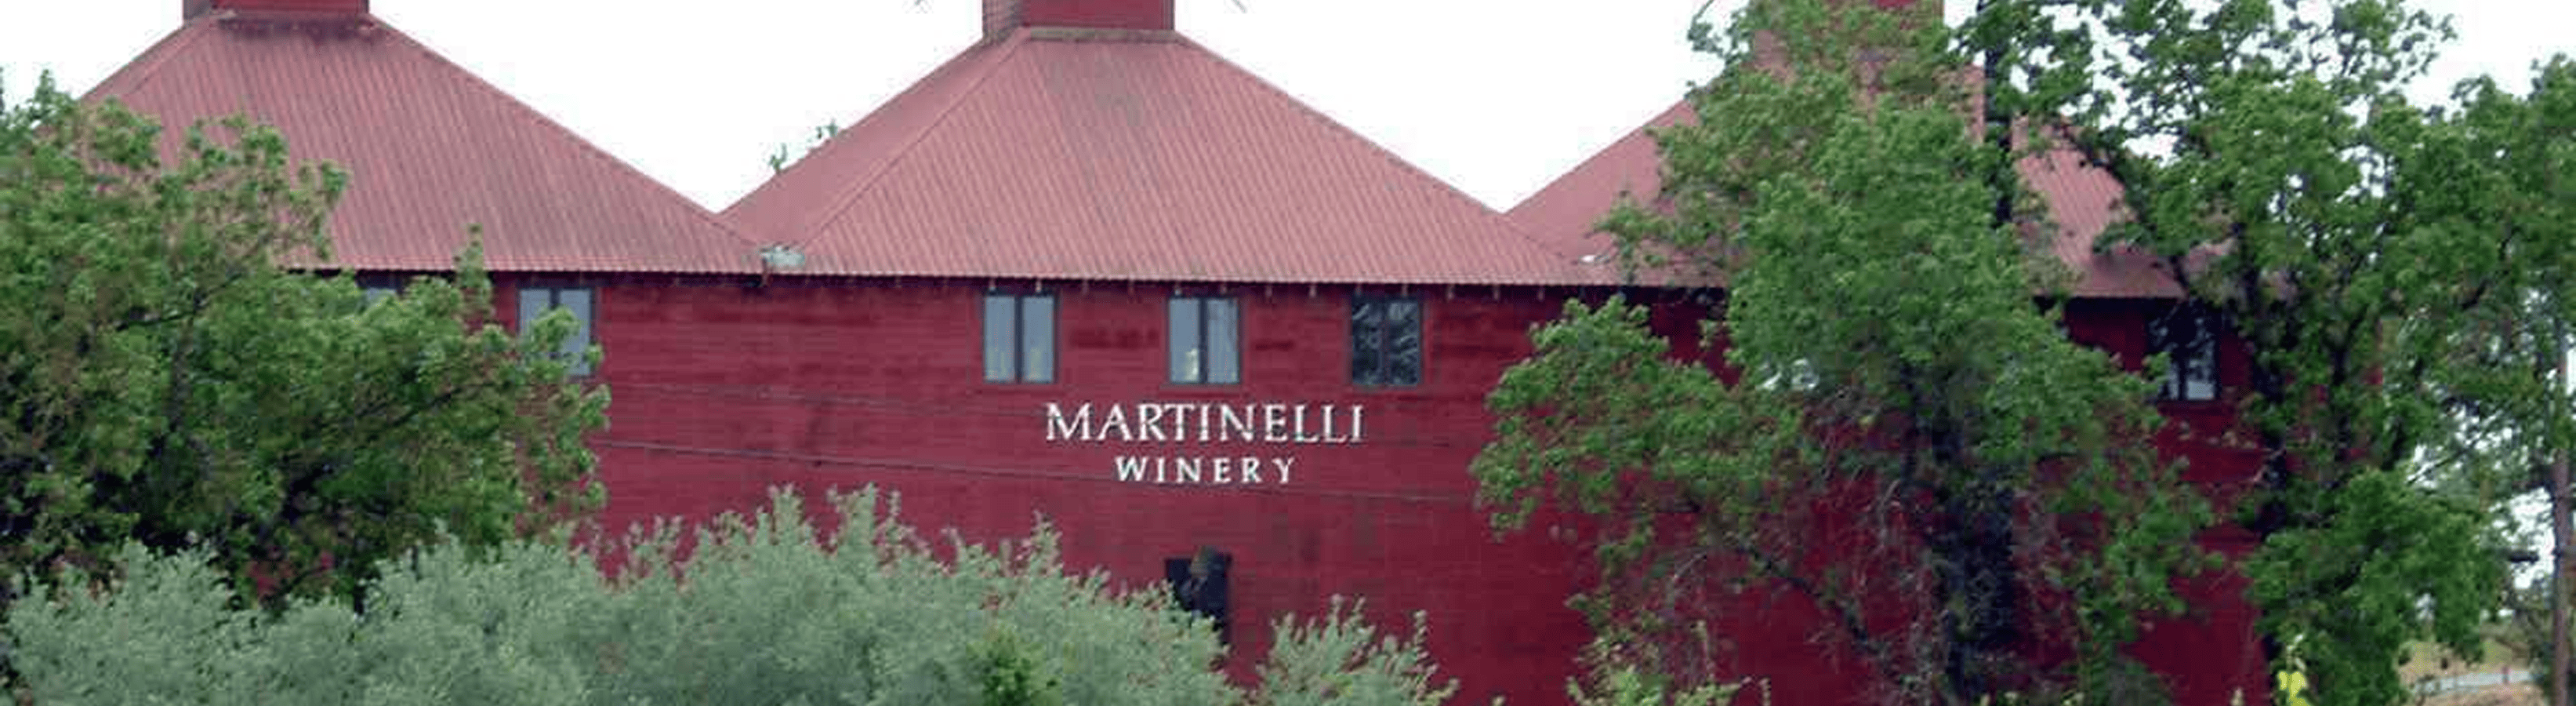 martinelli vineyards & winery